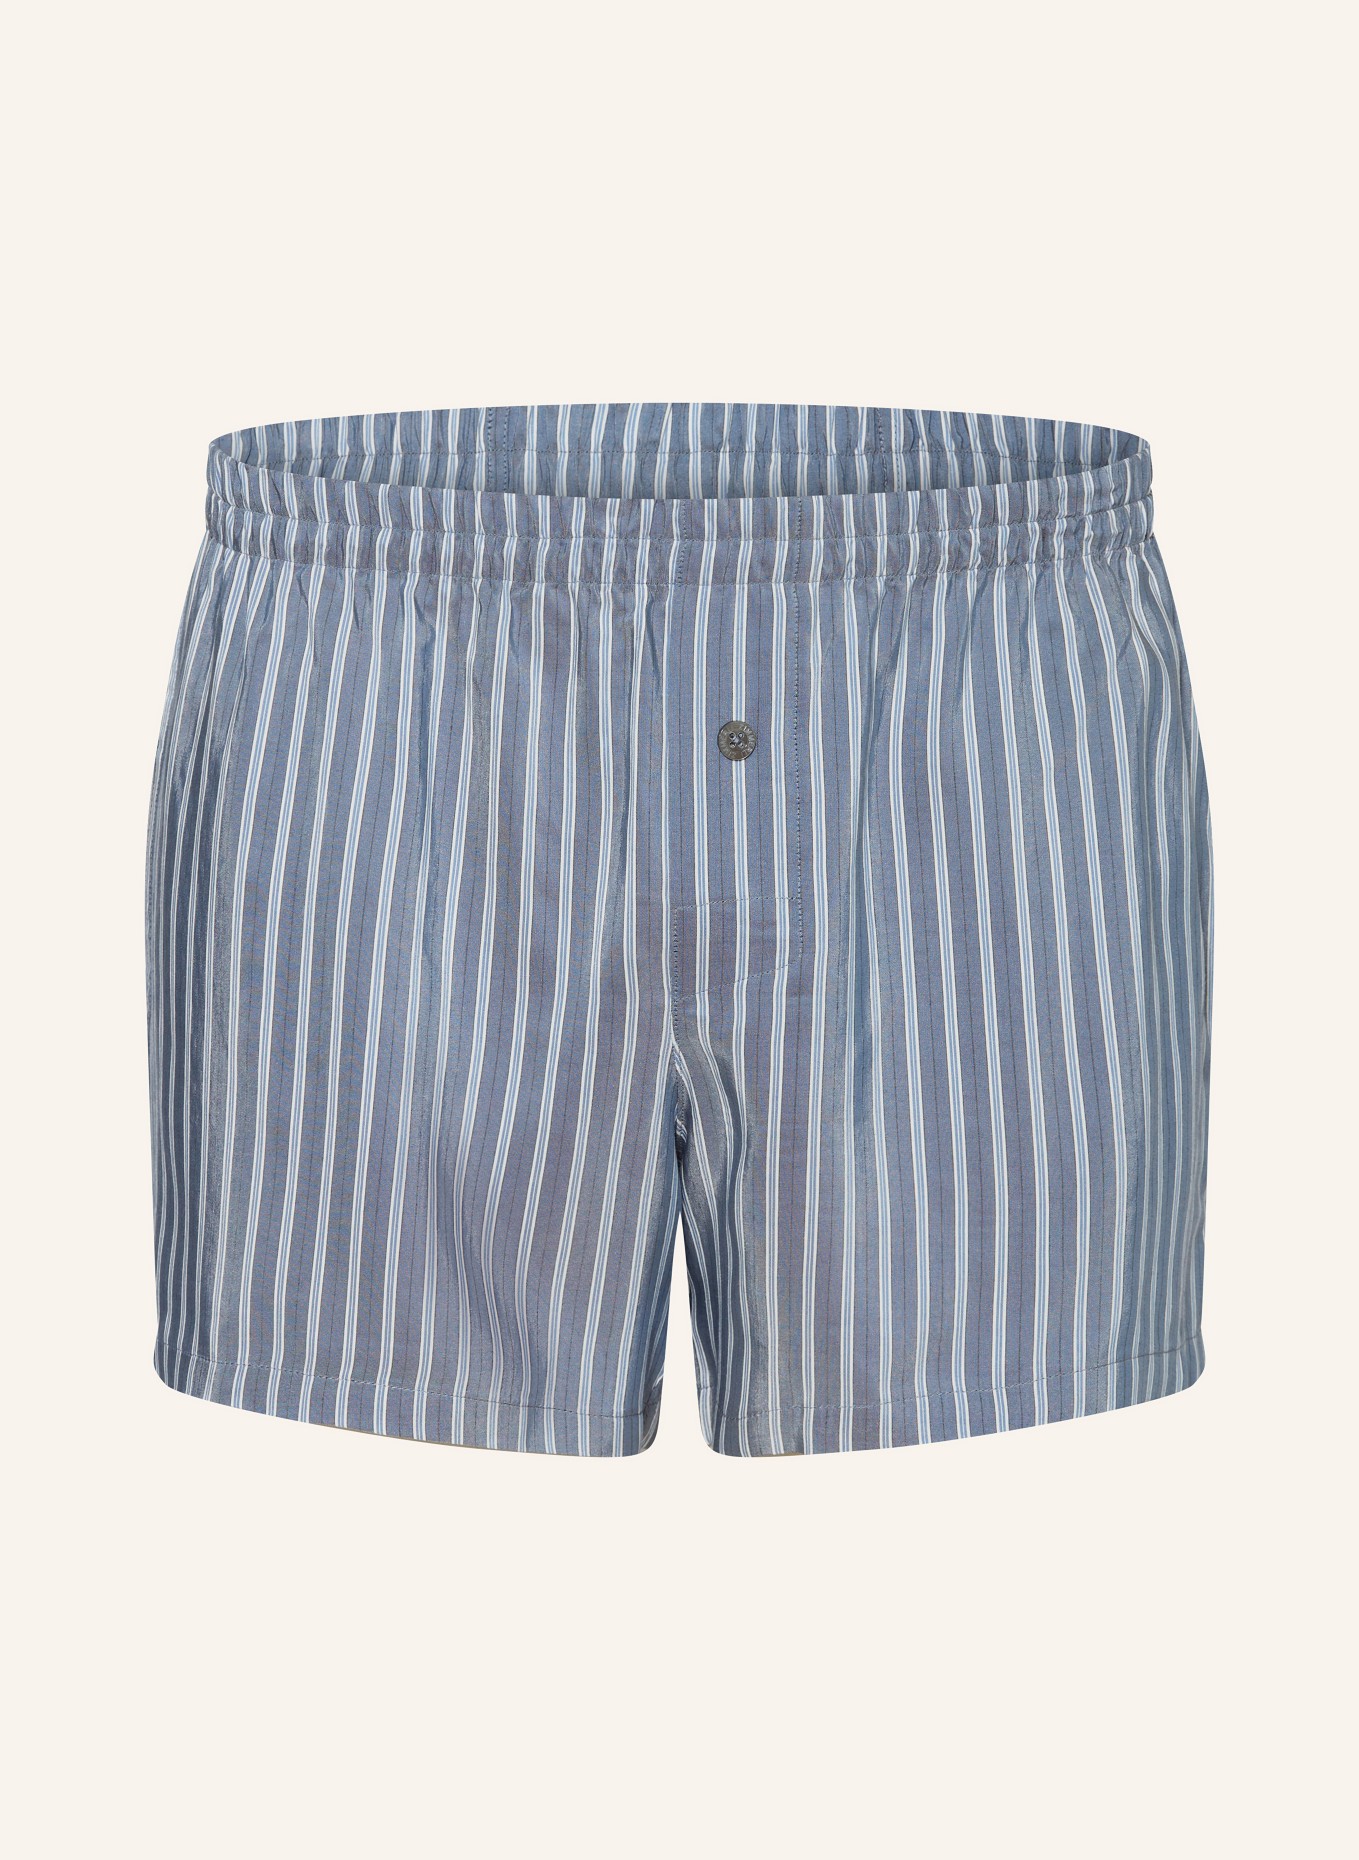 zimmerli Woven boxer shorts PINSTRIPES, Color: GRAY/ LIGHT BLUE/ WHITE (Image 1)